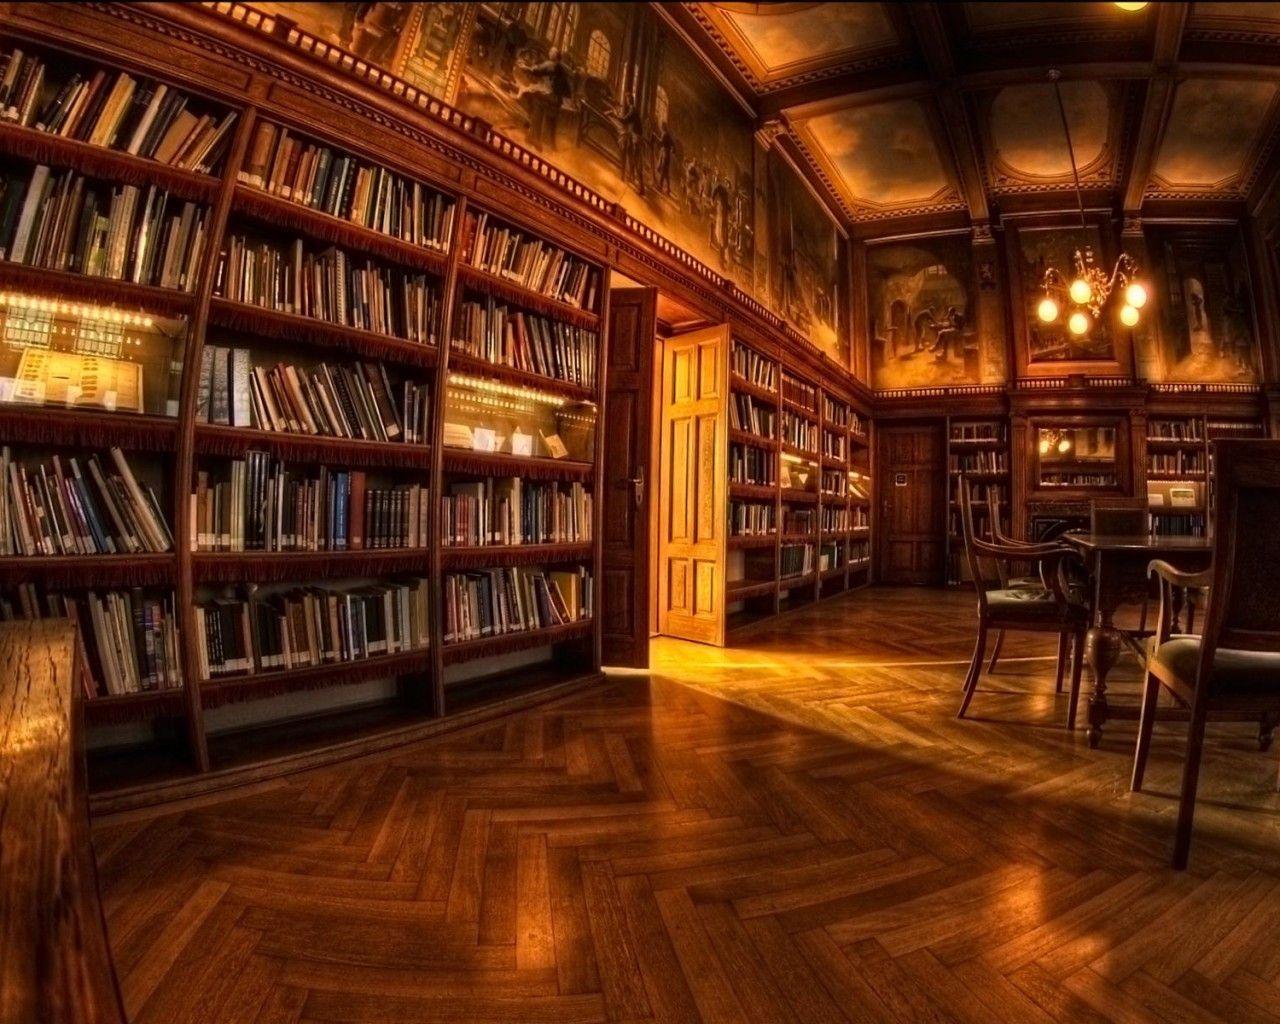 Fantasy Library